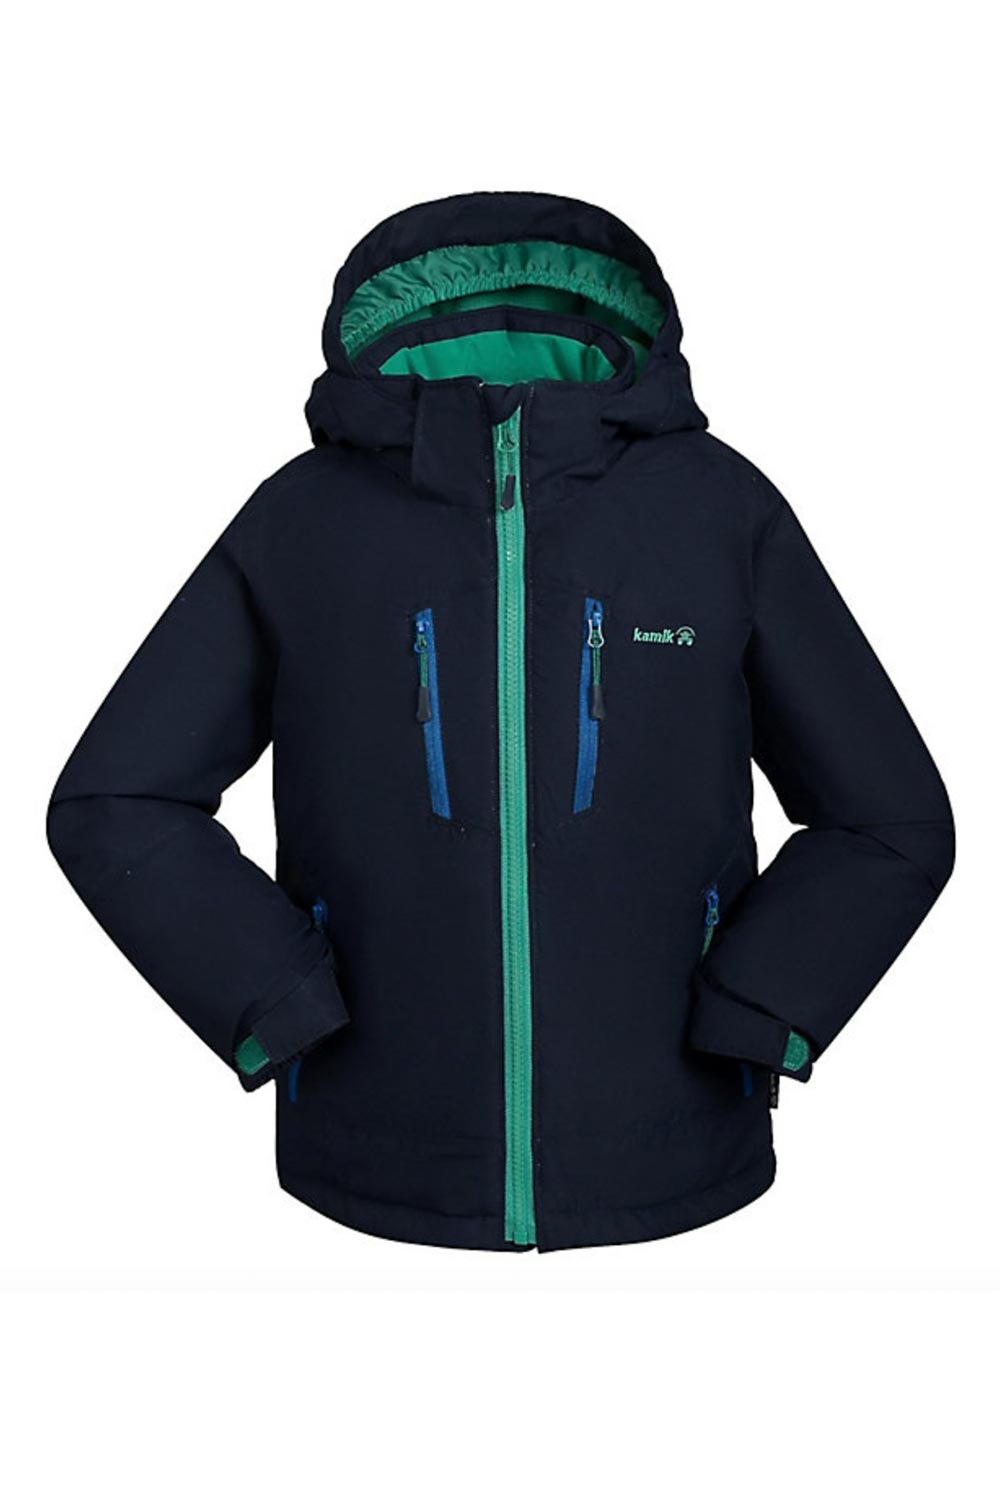 Kamik boys' ski jacket, navy blue with green accents